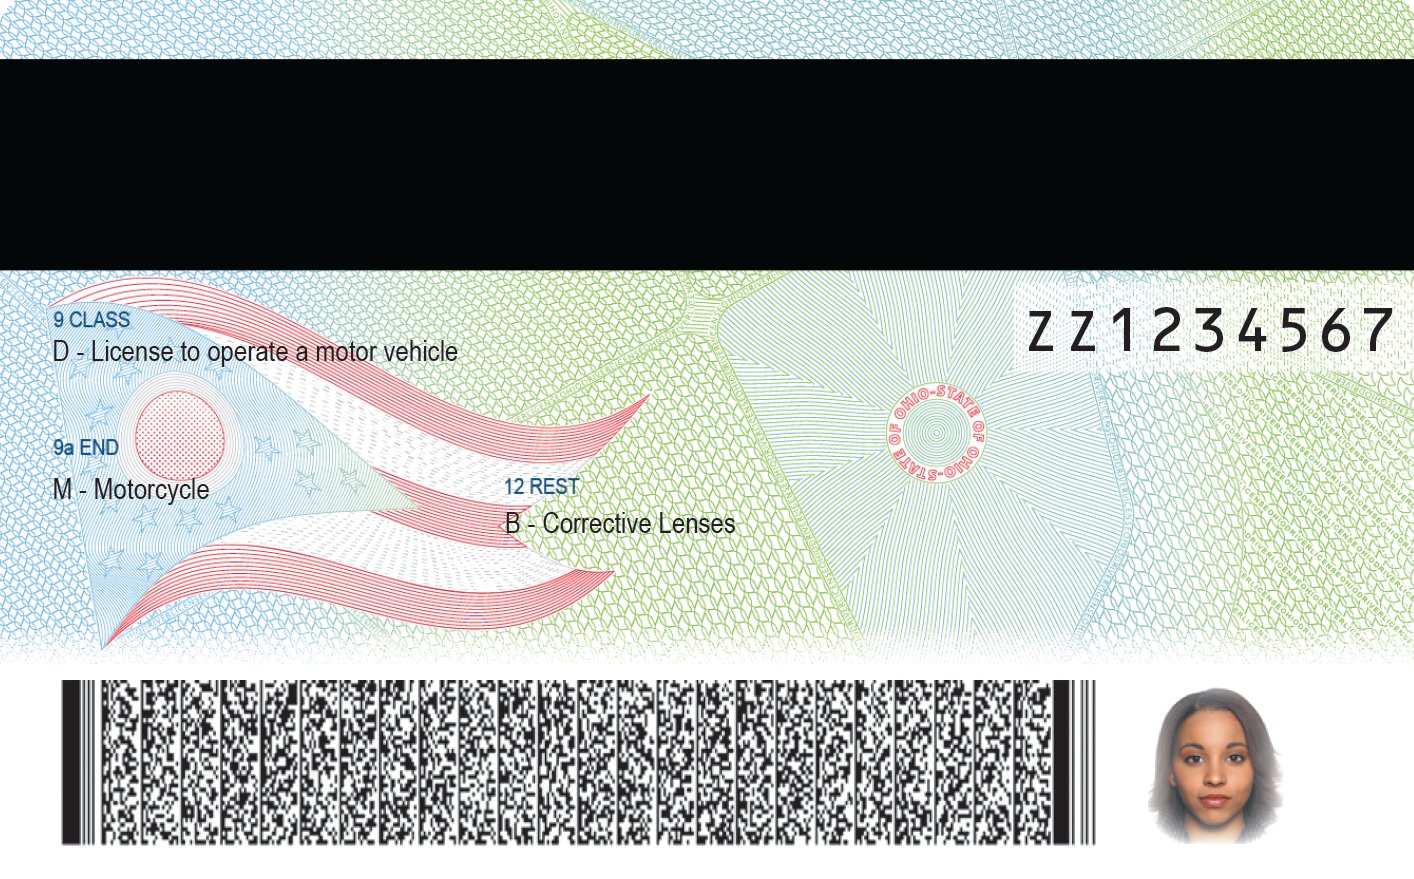 drivers license barcode reader